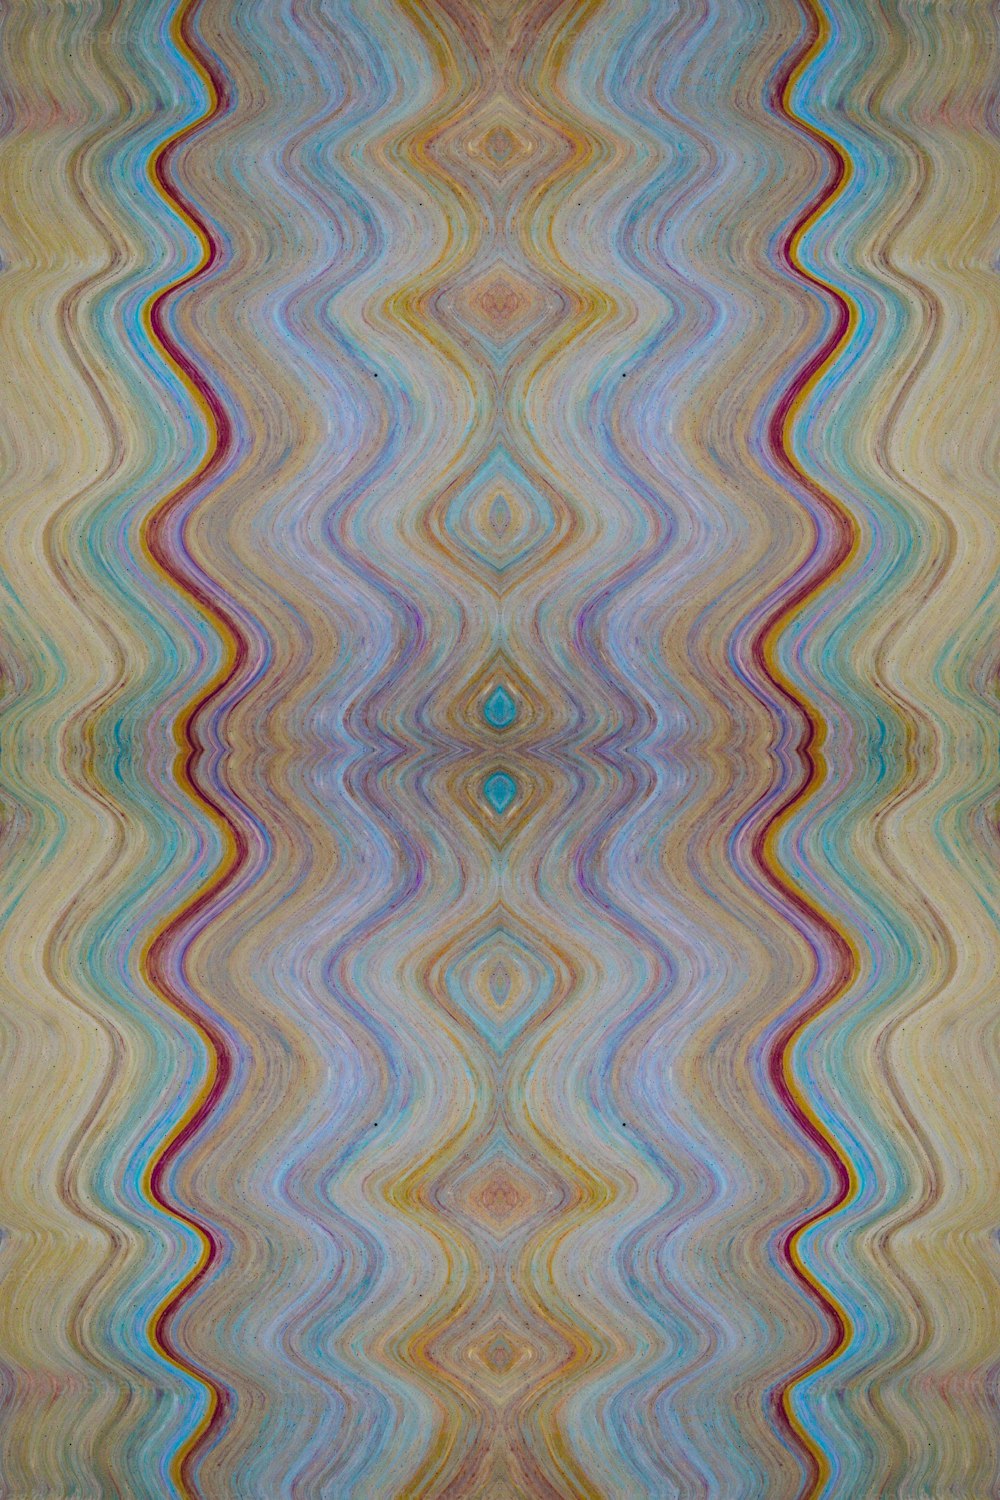 Un fondo multicolor con líneas onduladas